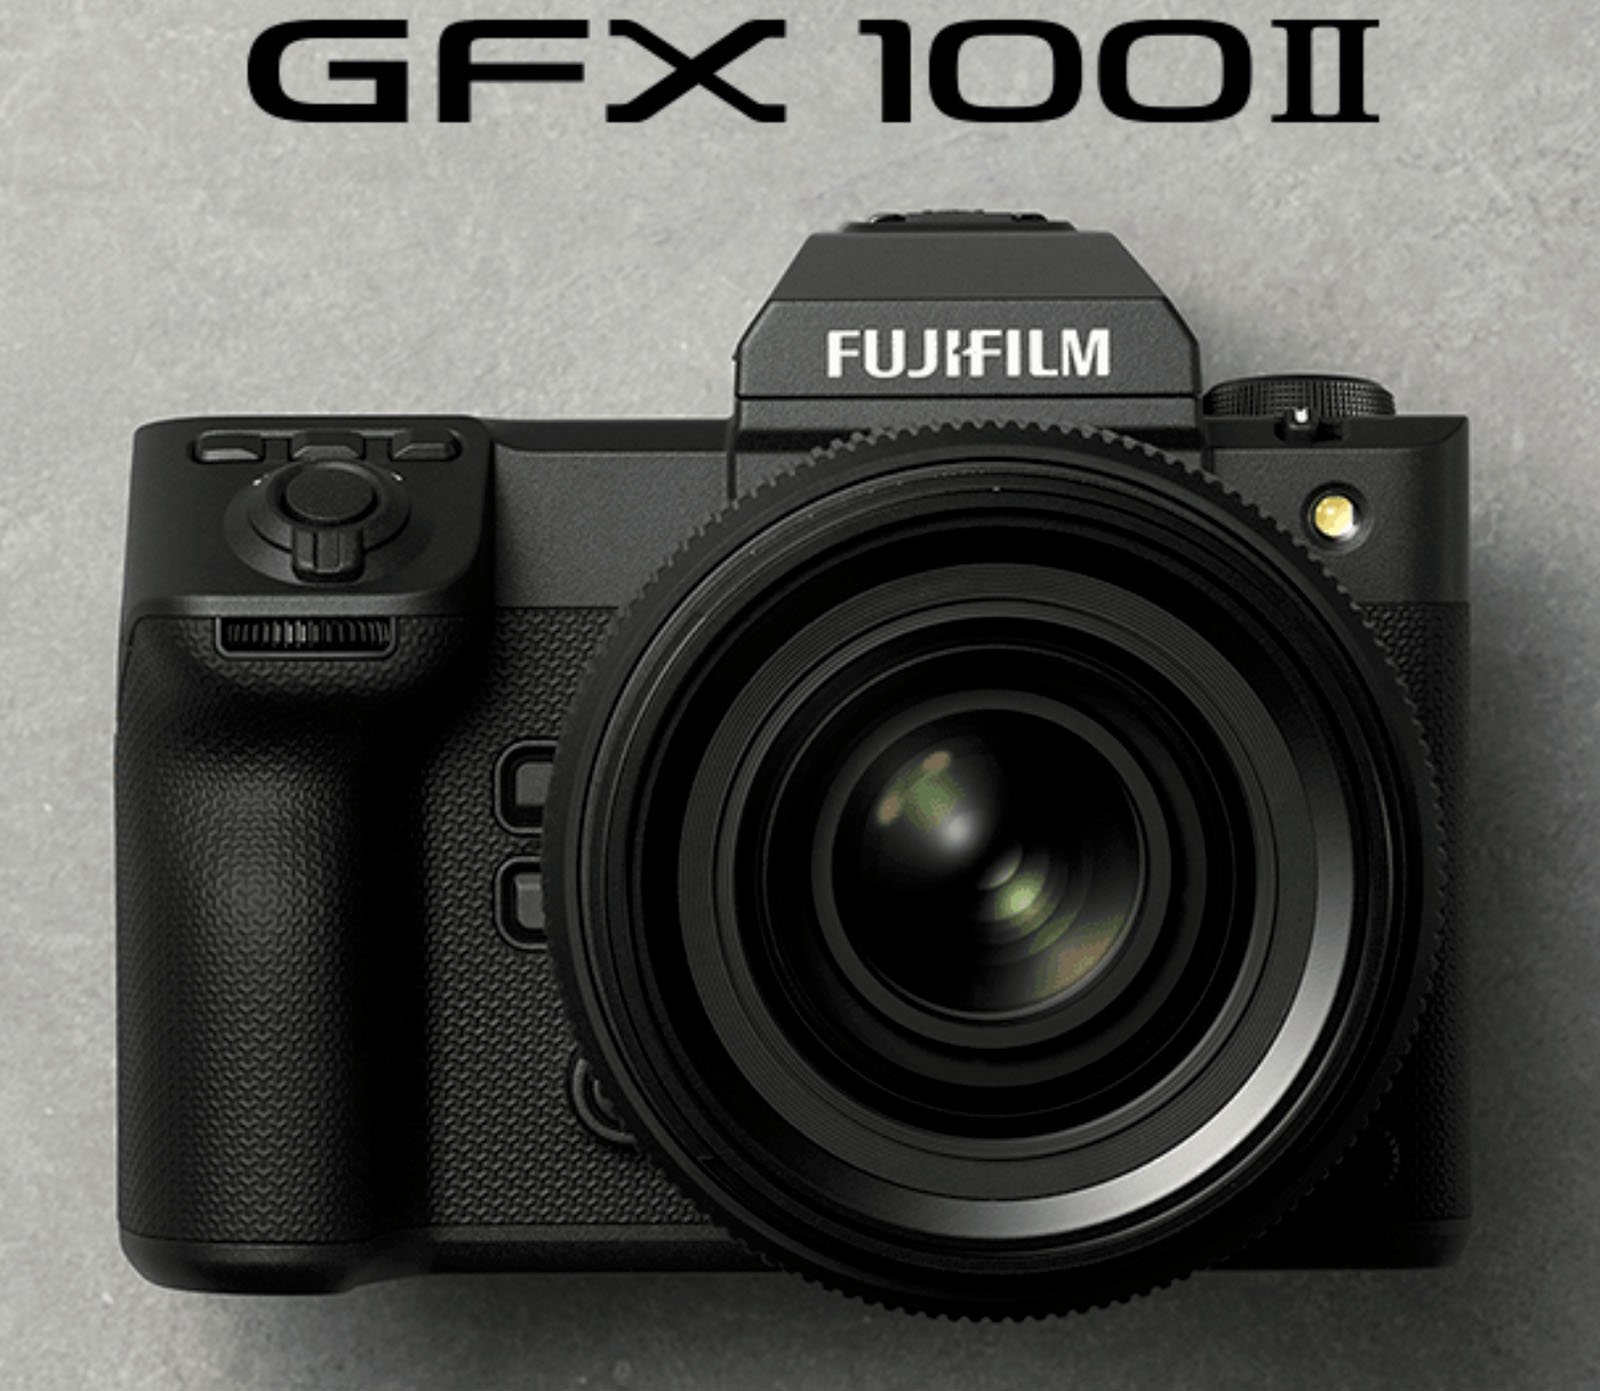 Fujifilm GFX100 II camera body against a light gray background. 